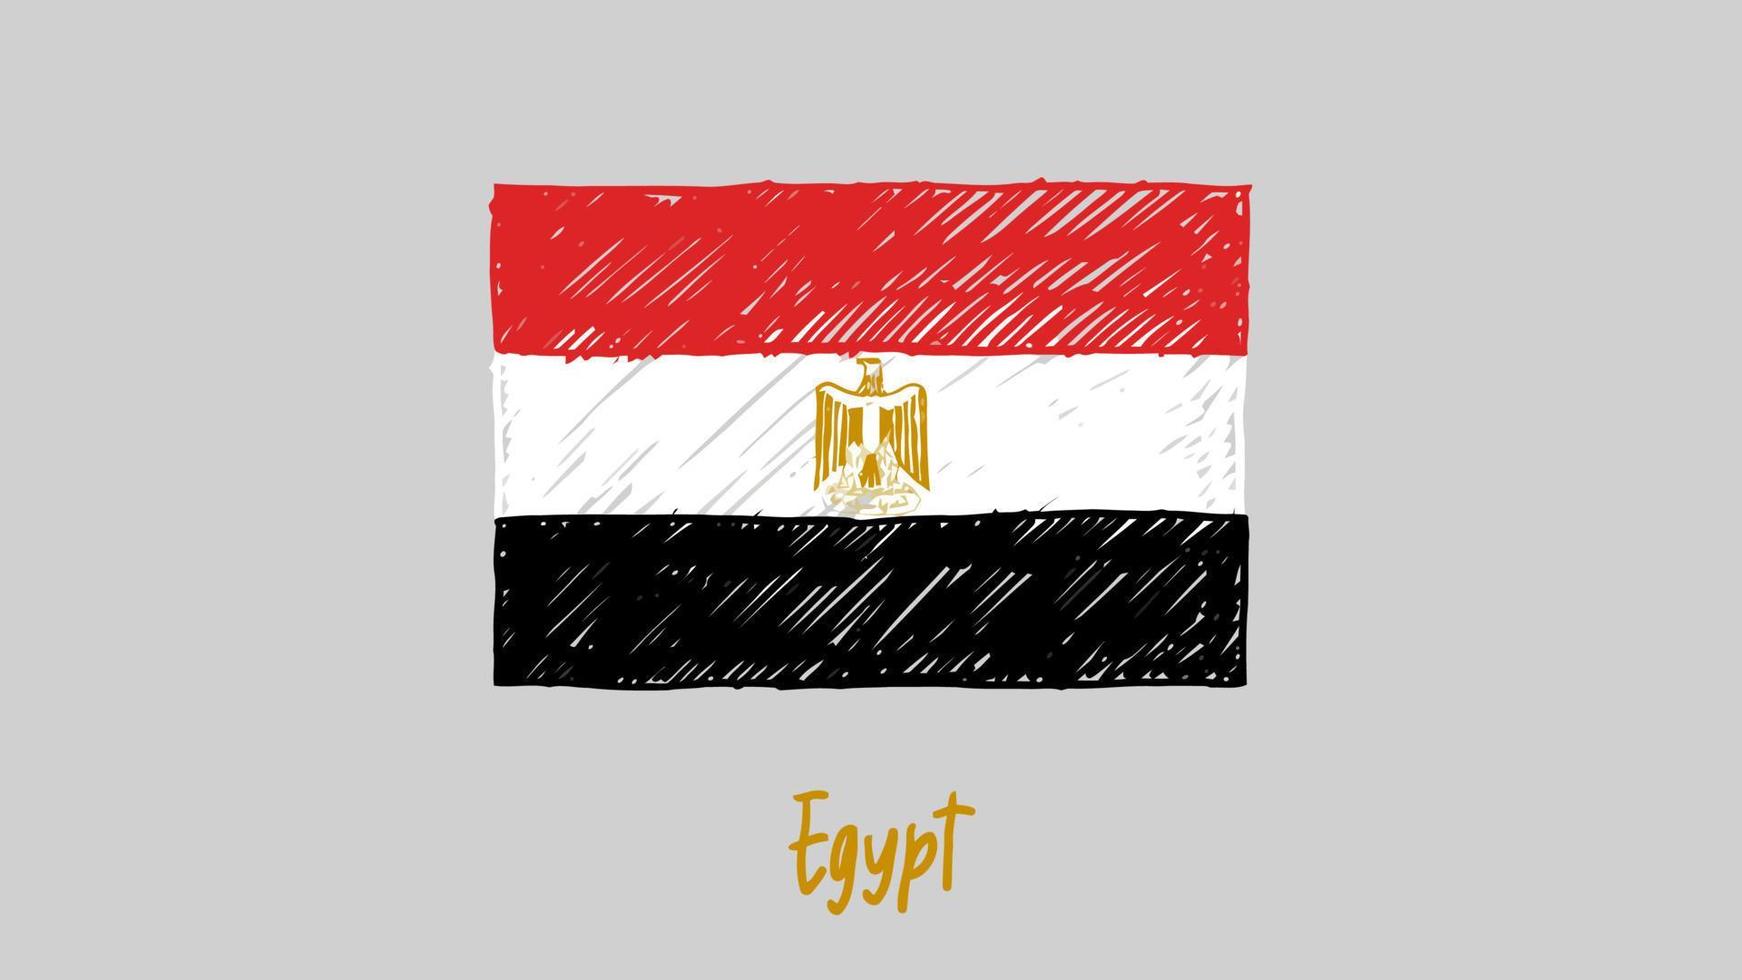 Egypt National Country Flag Marker or Pencil Sketch Illustration Vector